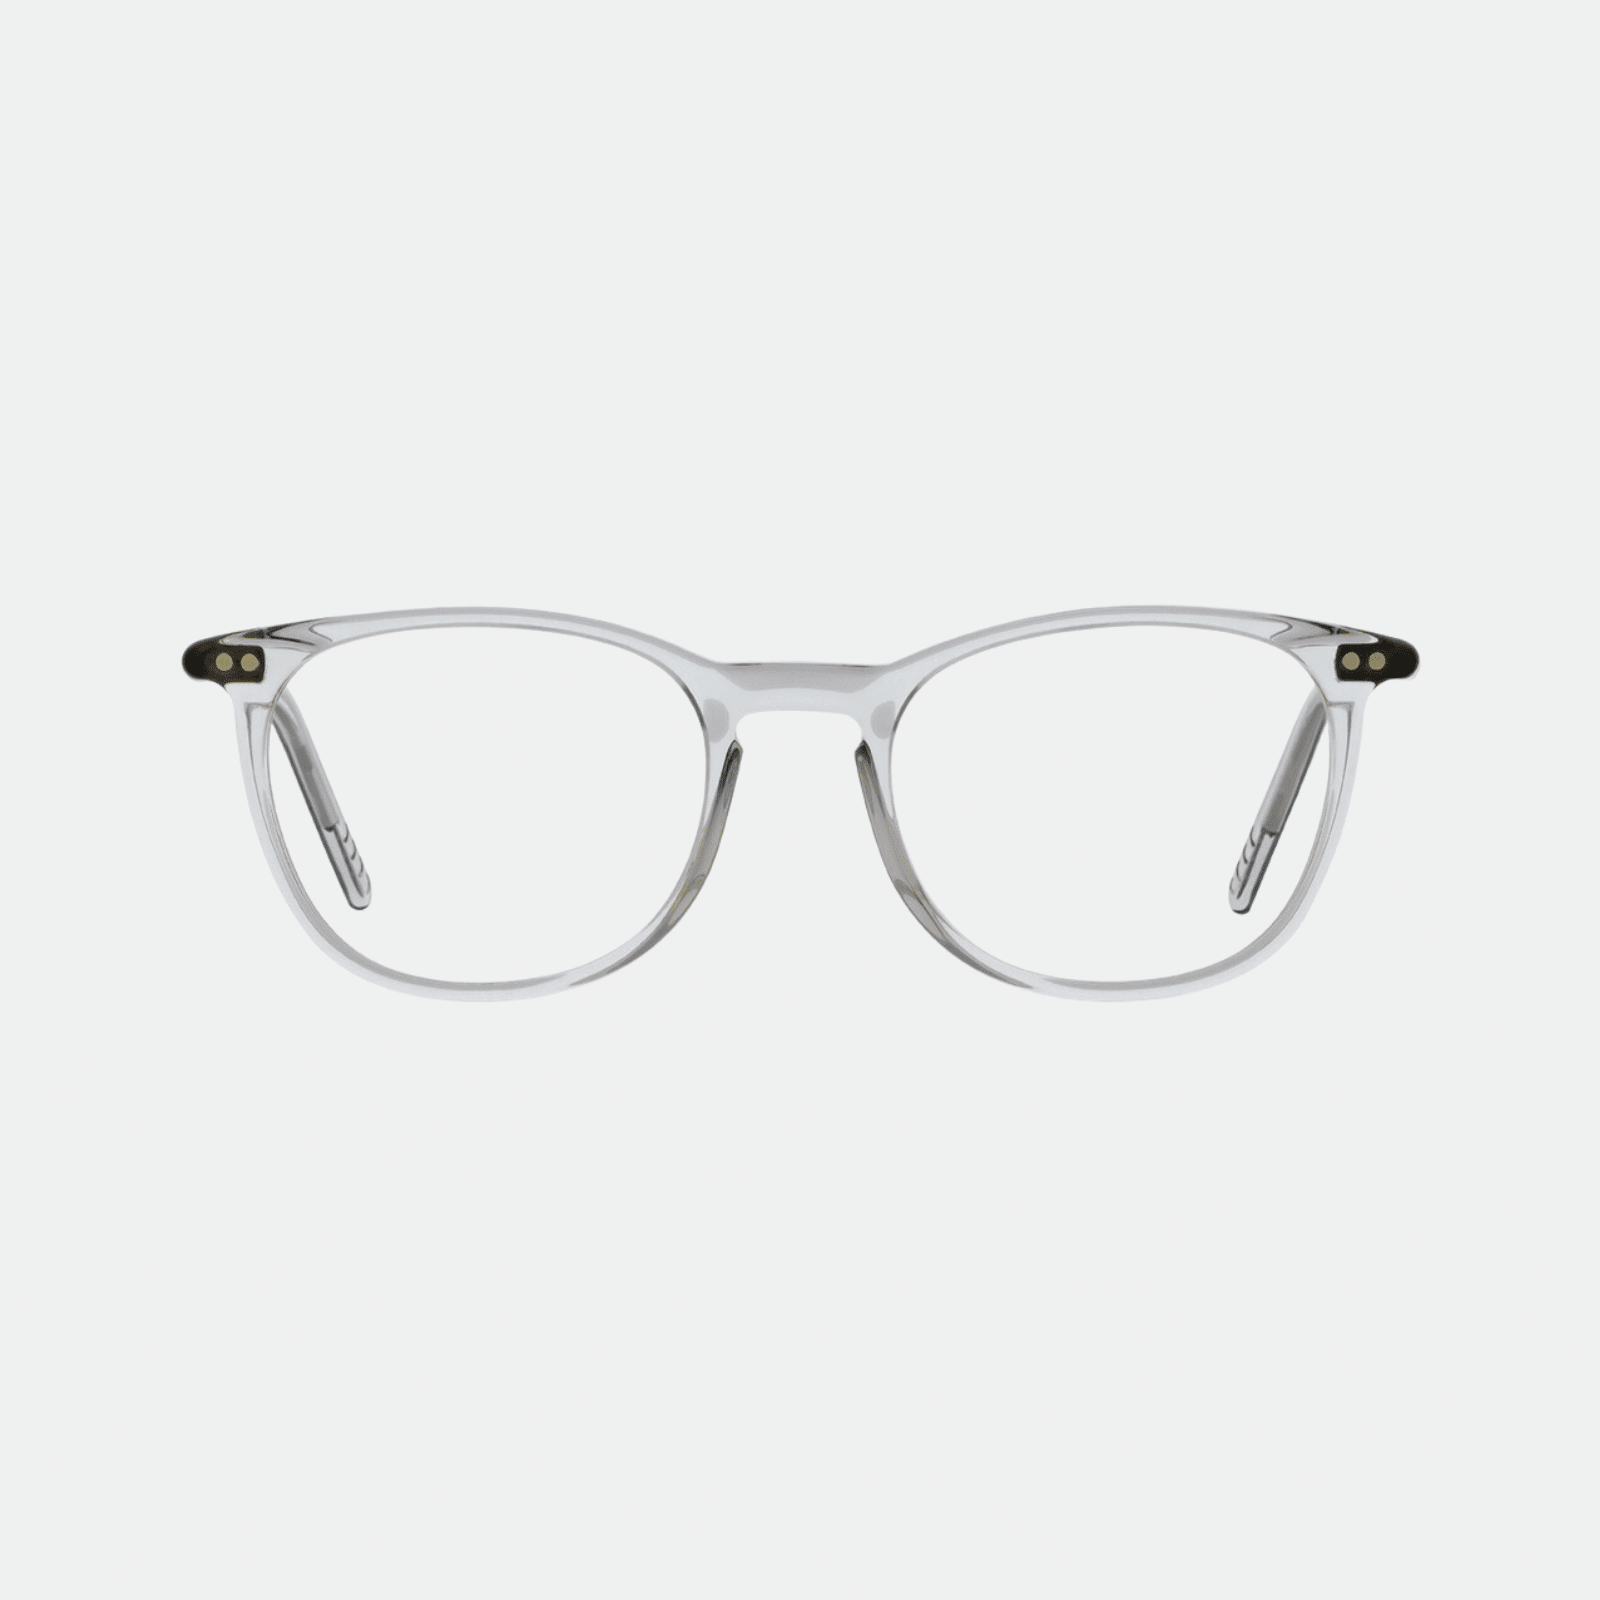 Lunor Clear Glasses Frames